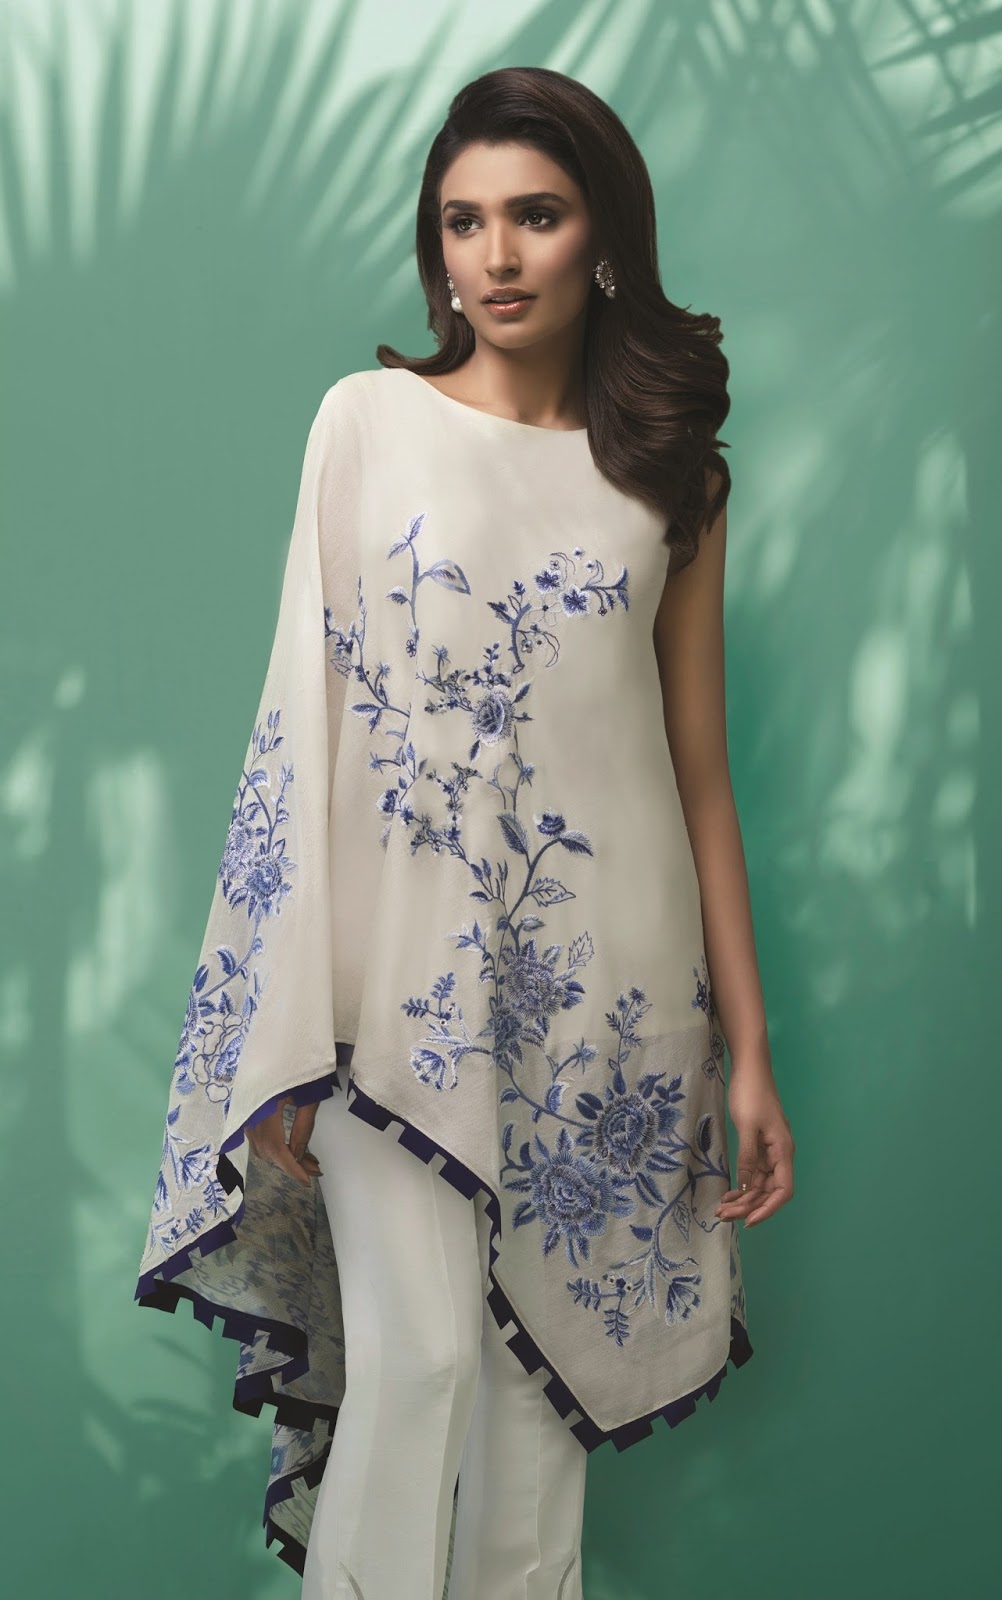 Pakistani Model Amna Ilyas Looks Super Hot In Her Latest Photoshoot